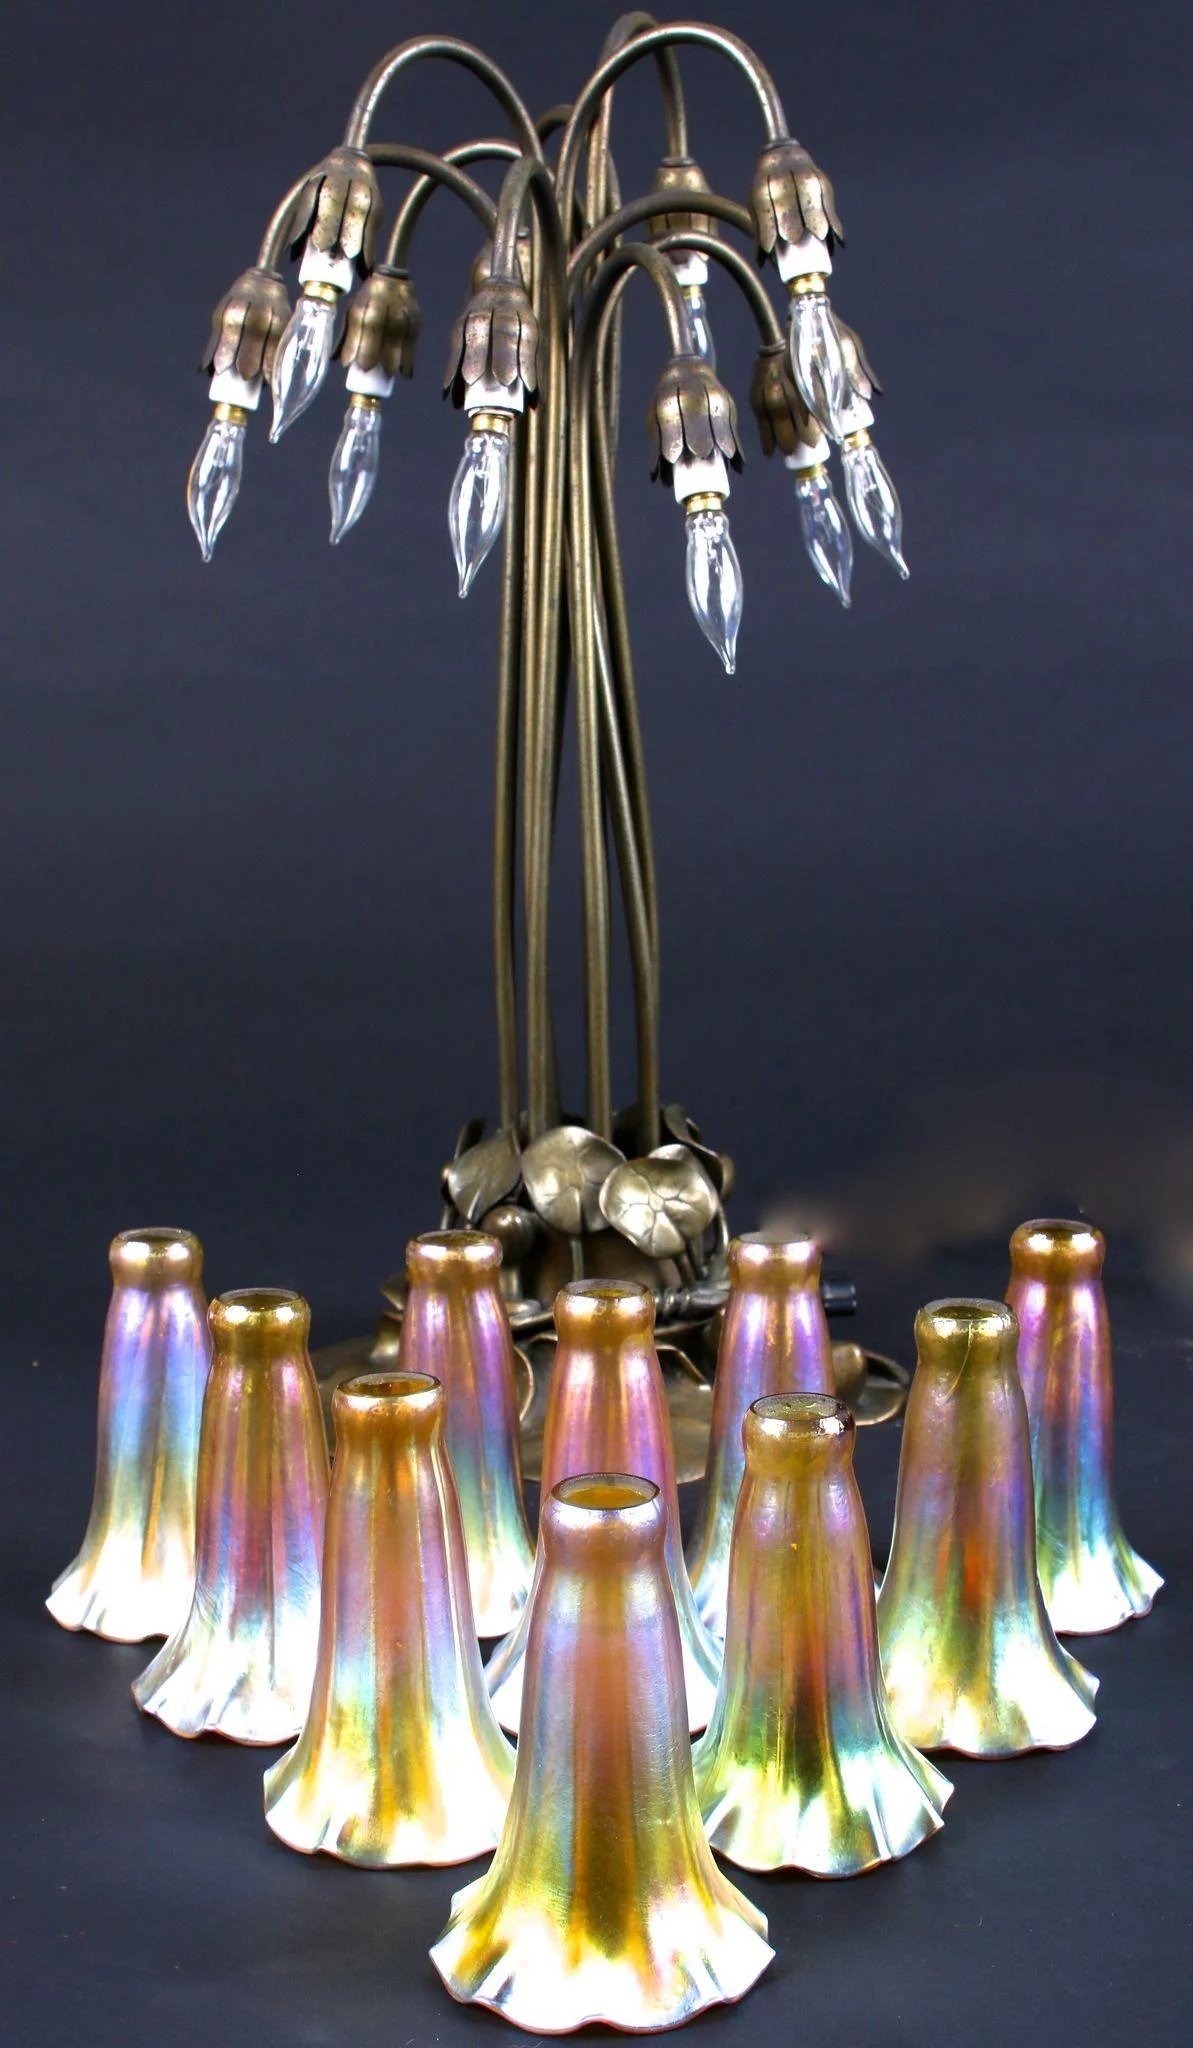 Tiffany studios ten light lily table lamp bronze finish